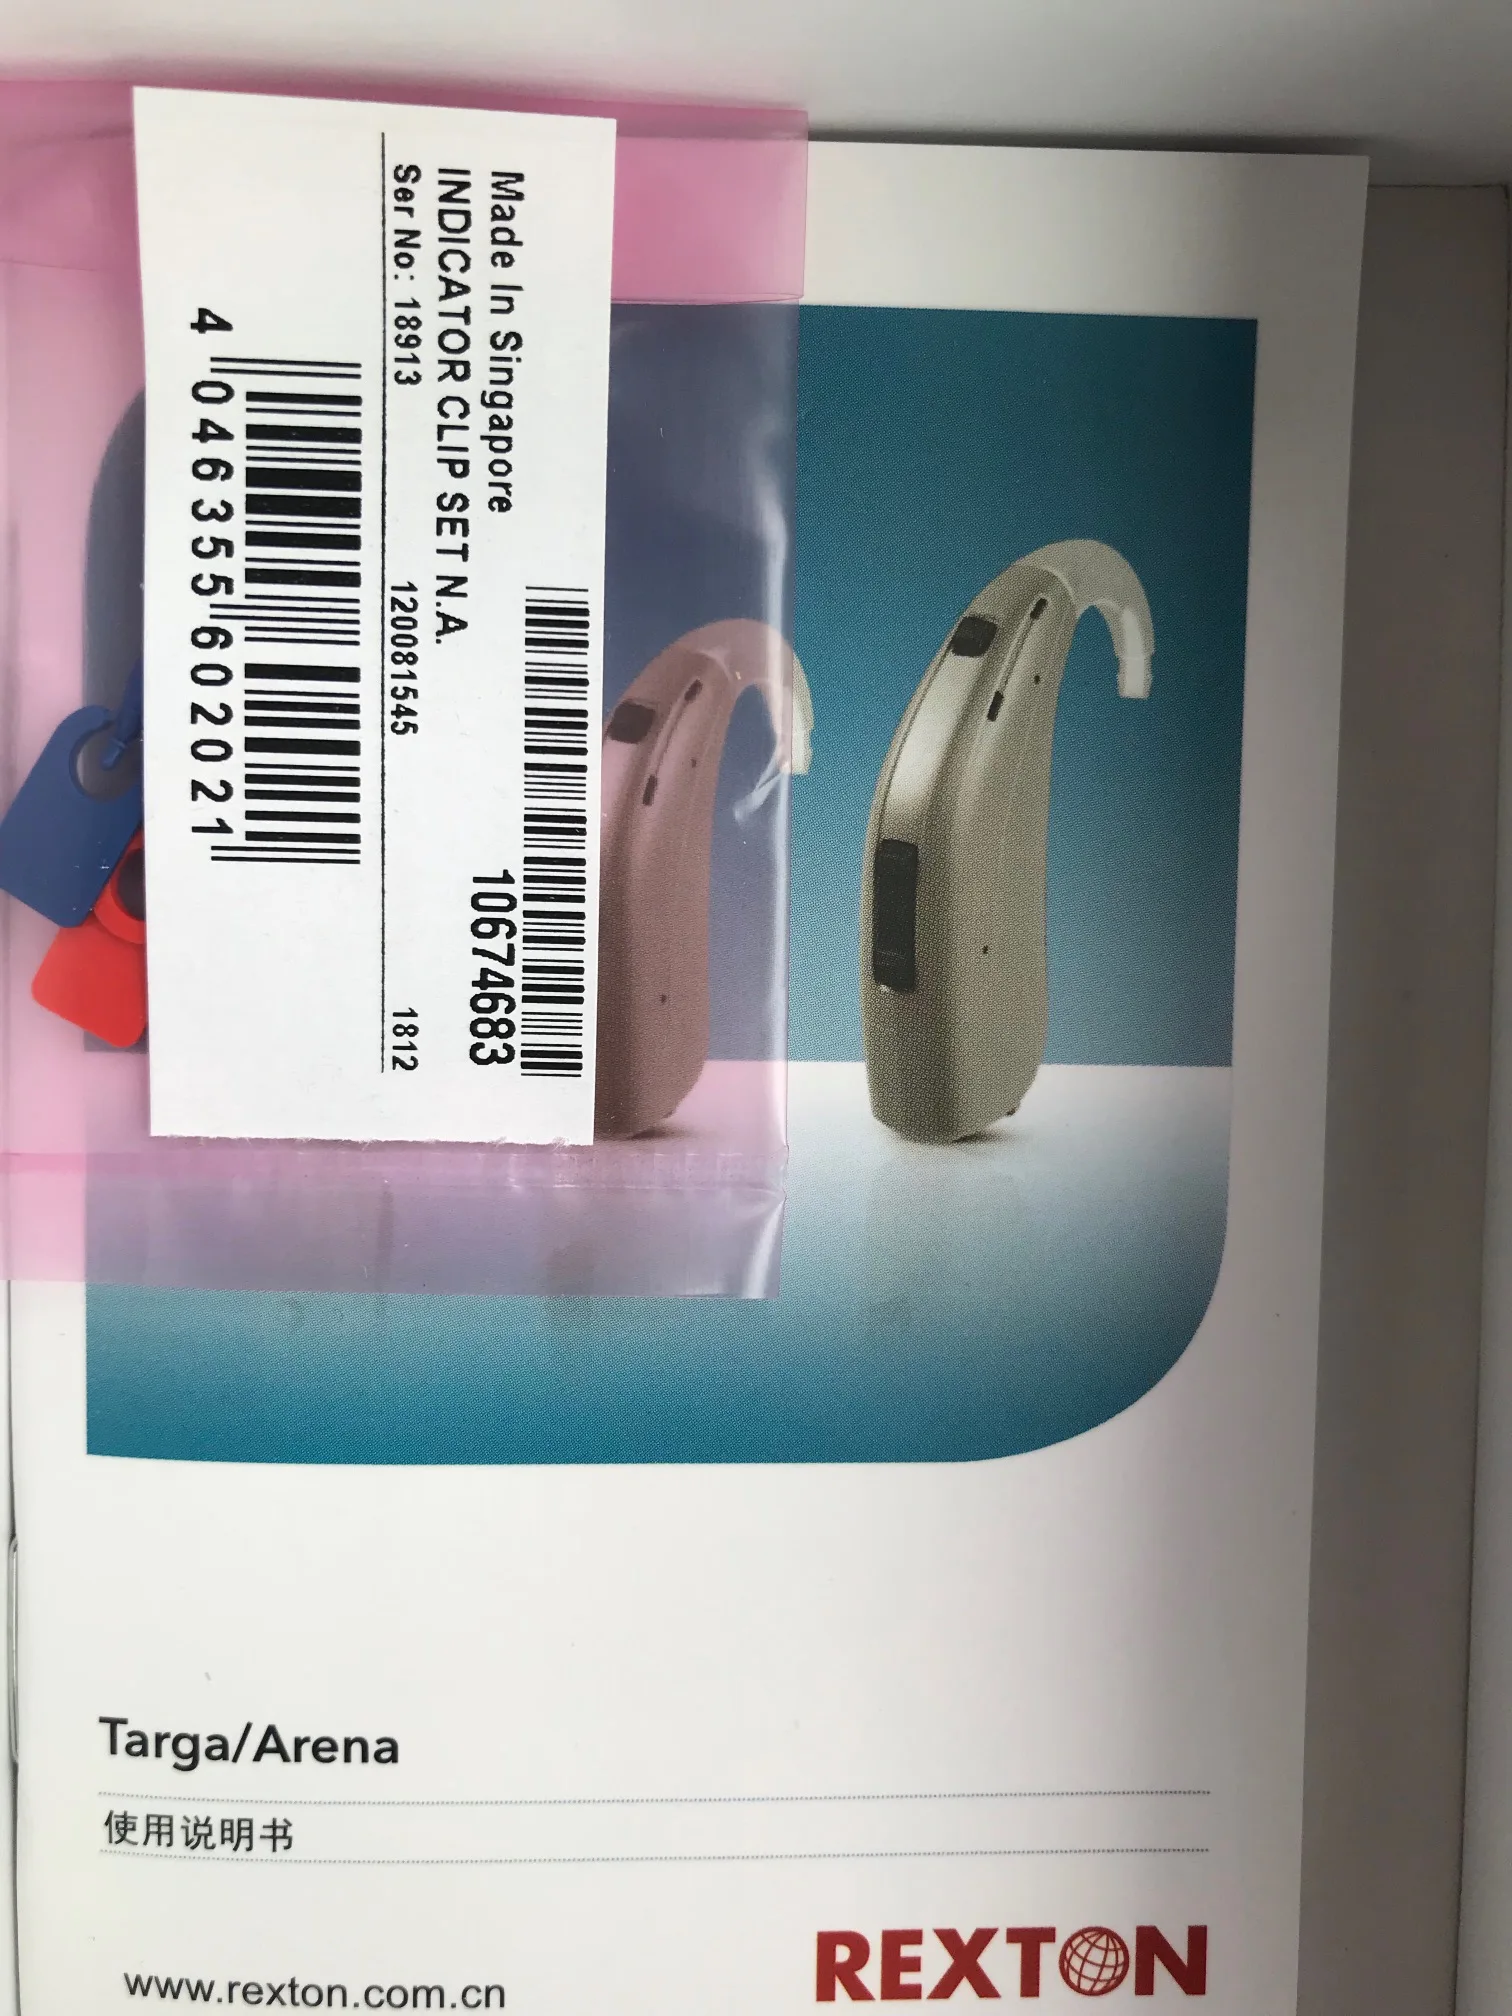 digital 4channels same signia fast rexton arena p hearing aid